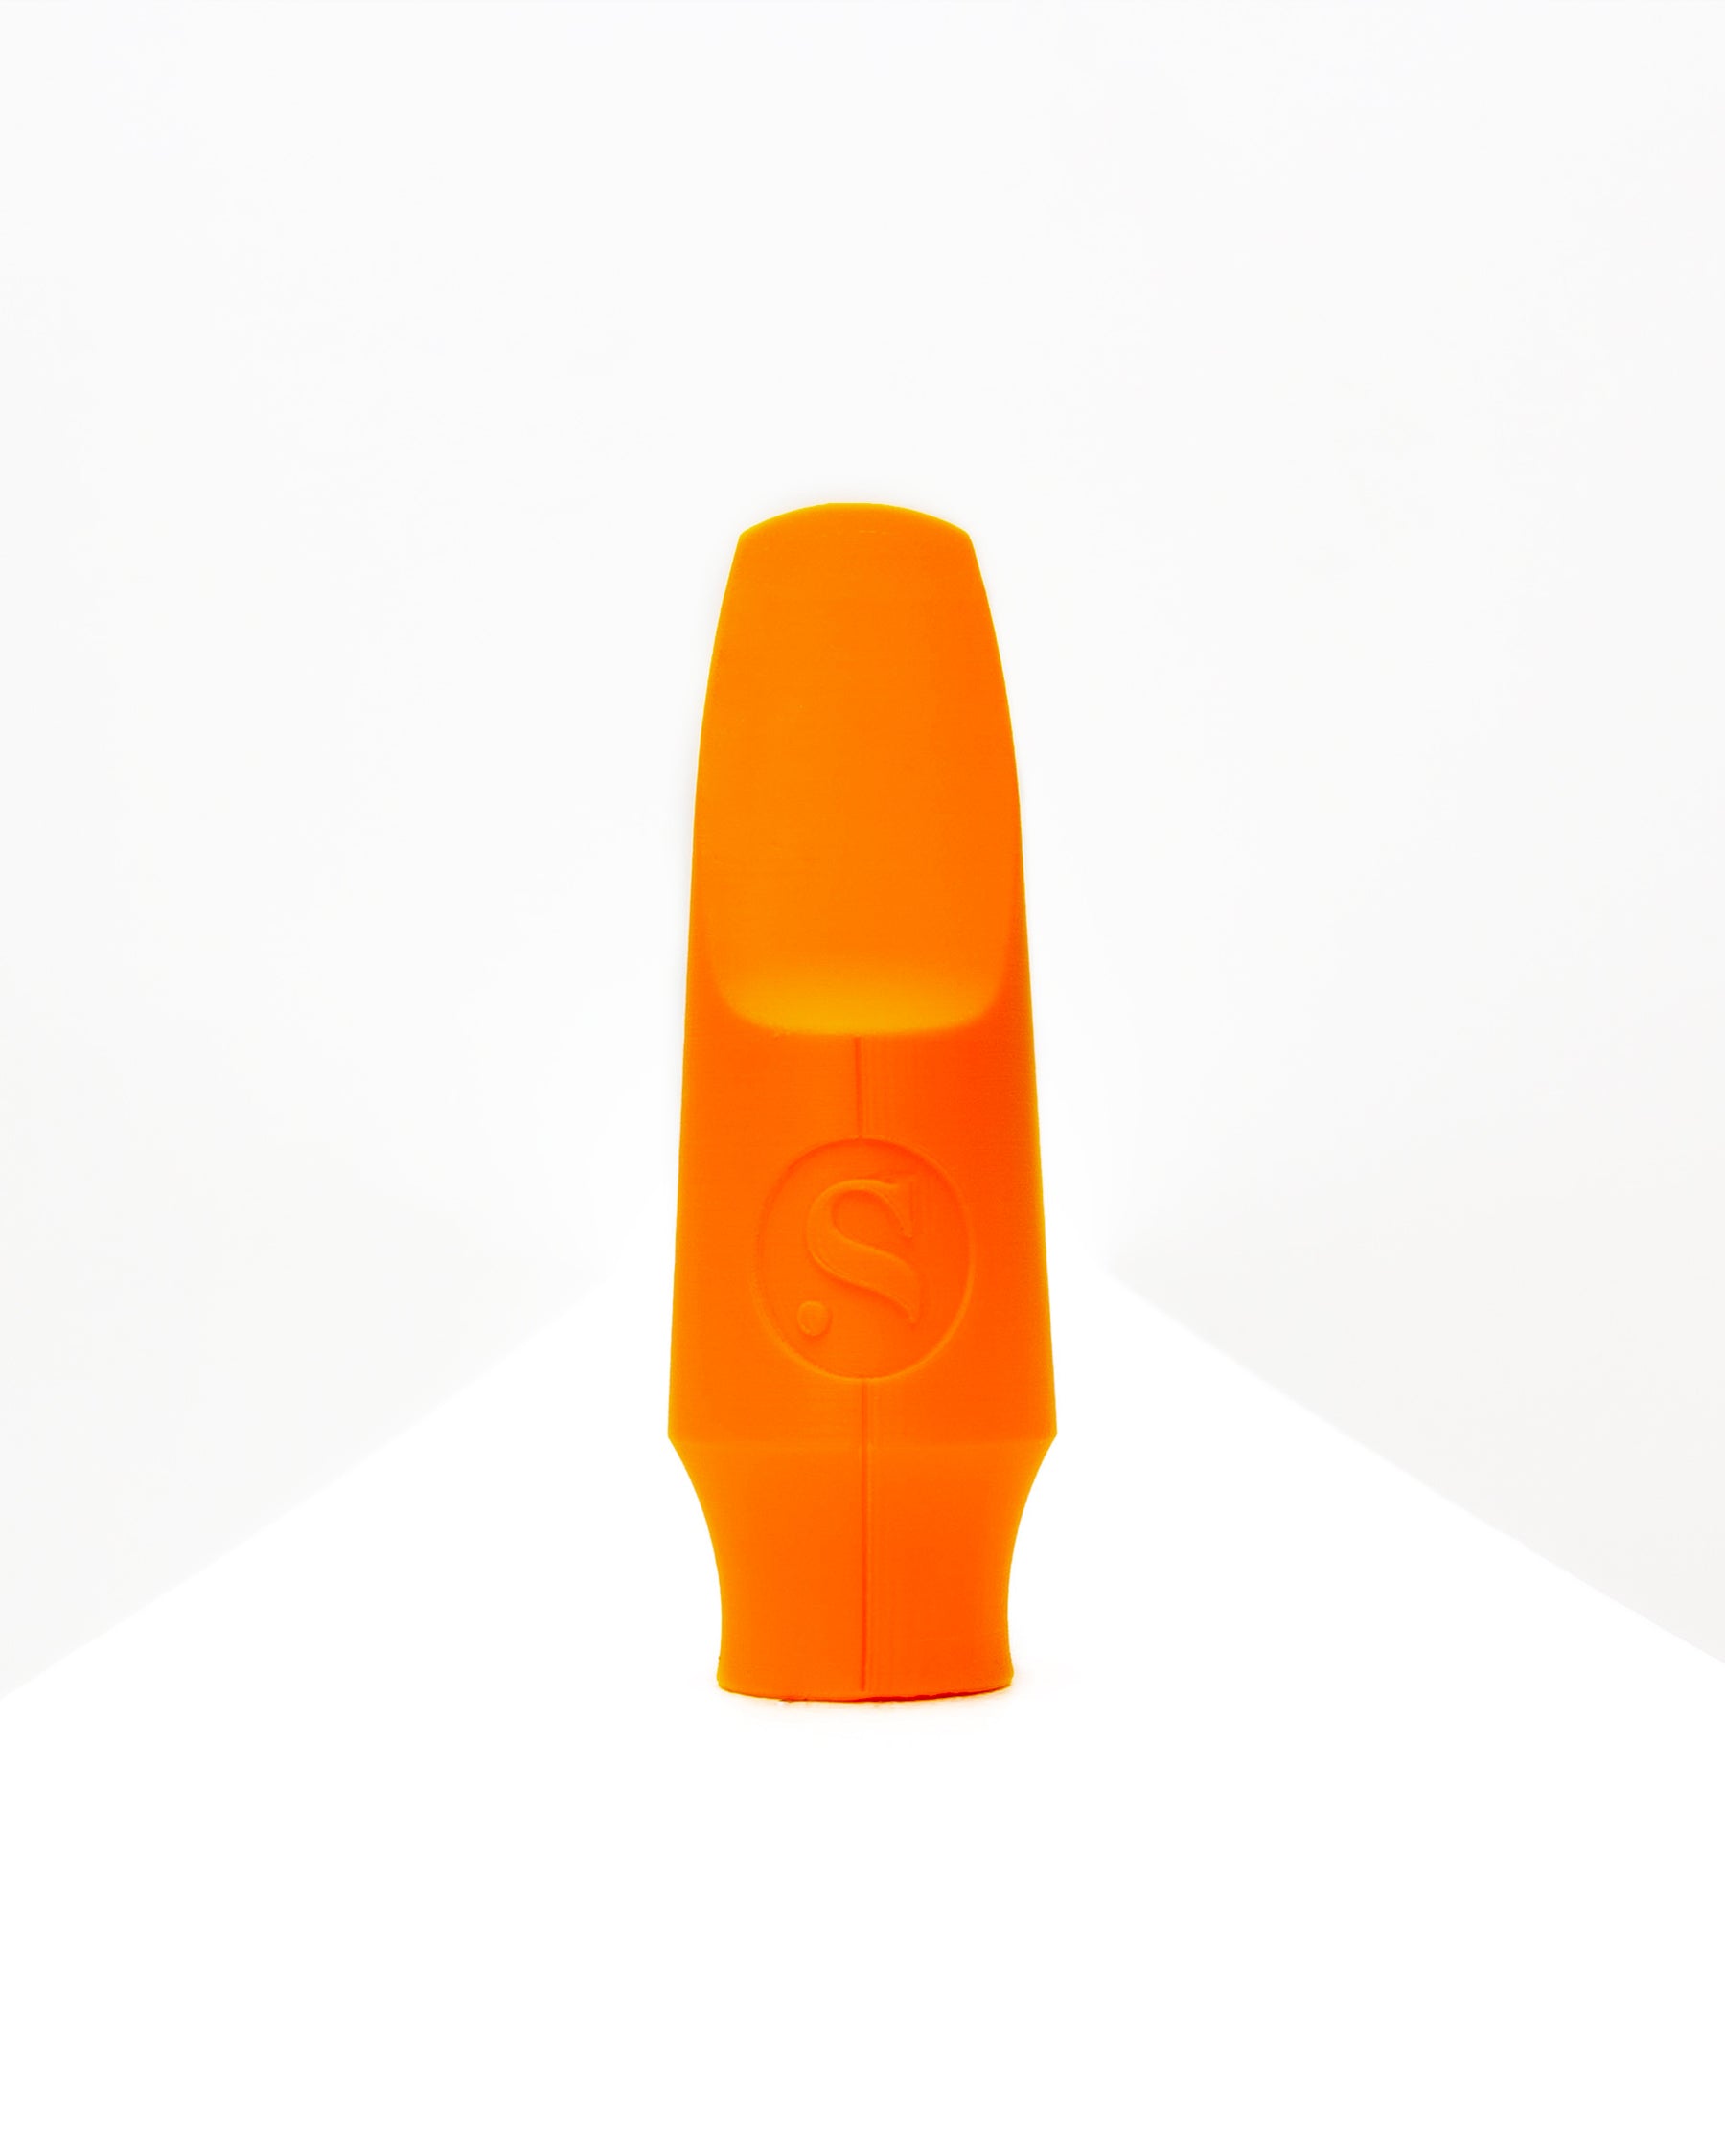 Alto Signature Saxophone mouthpiece - Parthenope by Syos - 9 / Lava Orange